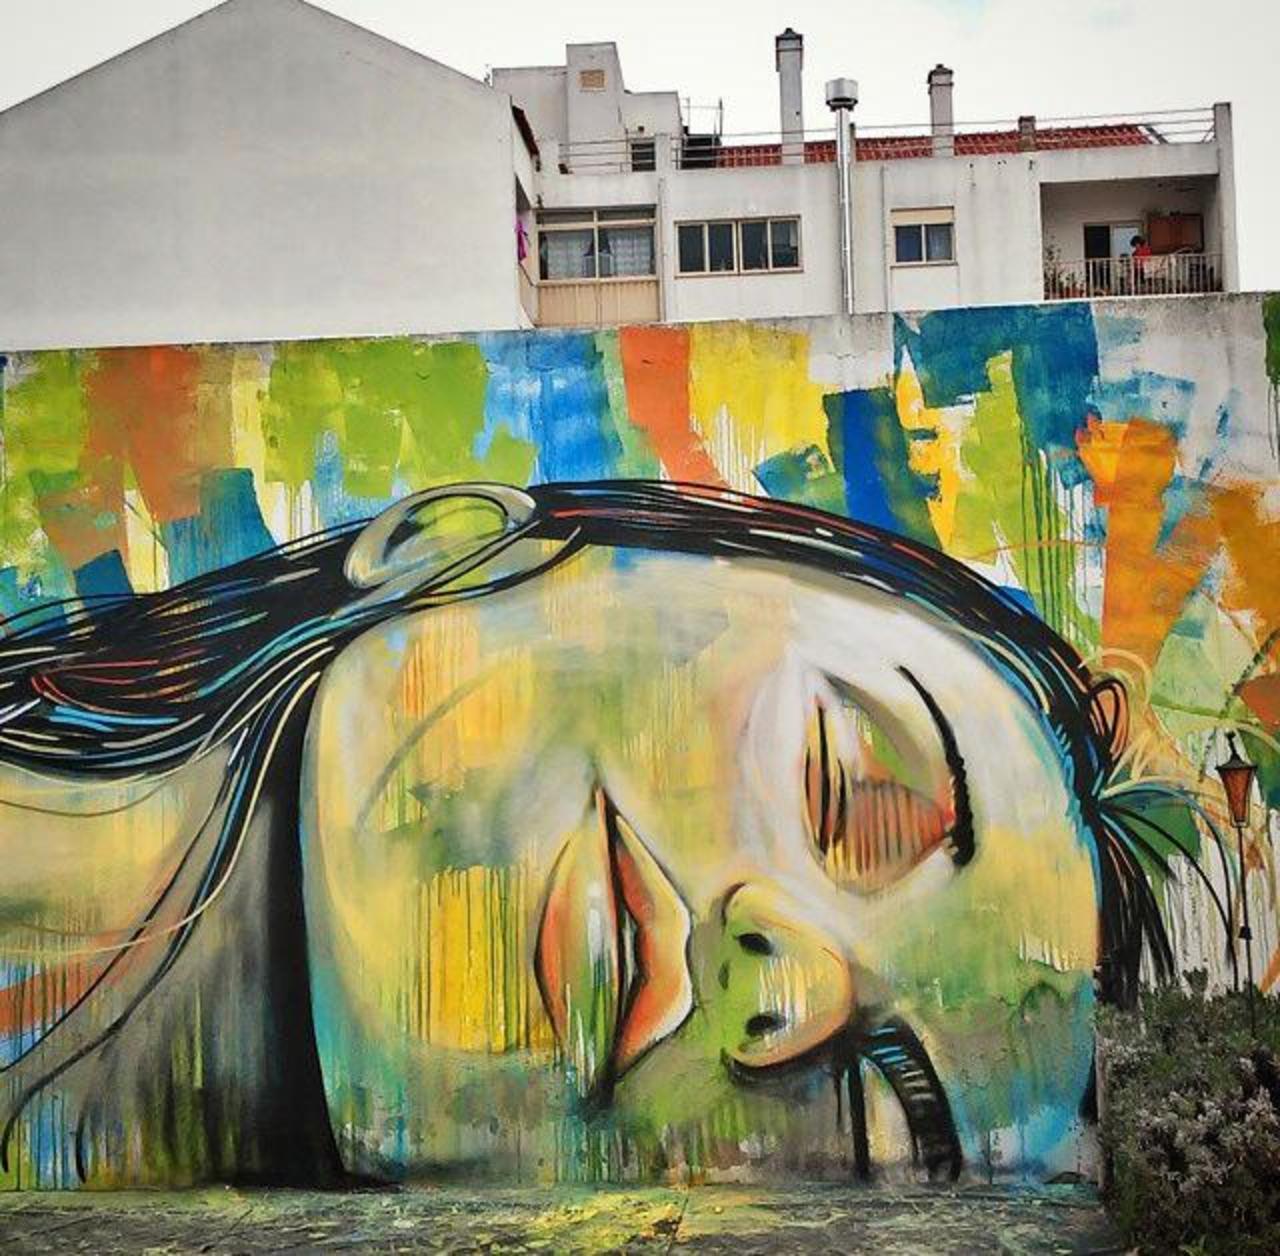 New Street Art wall in Ponte de Sor, Portugal by Alice Pasquini 

#art #arte #graffiti #streetart http://t.co/FKvAy5KFoy